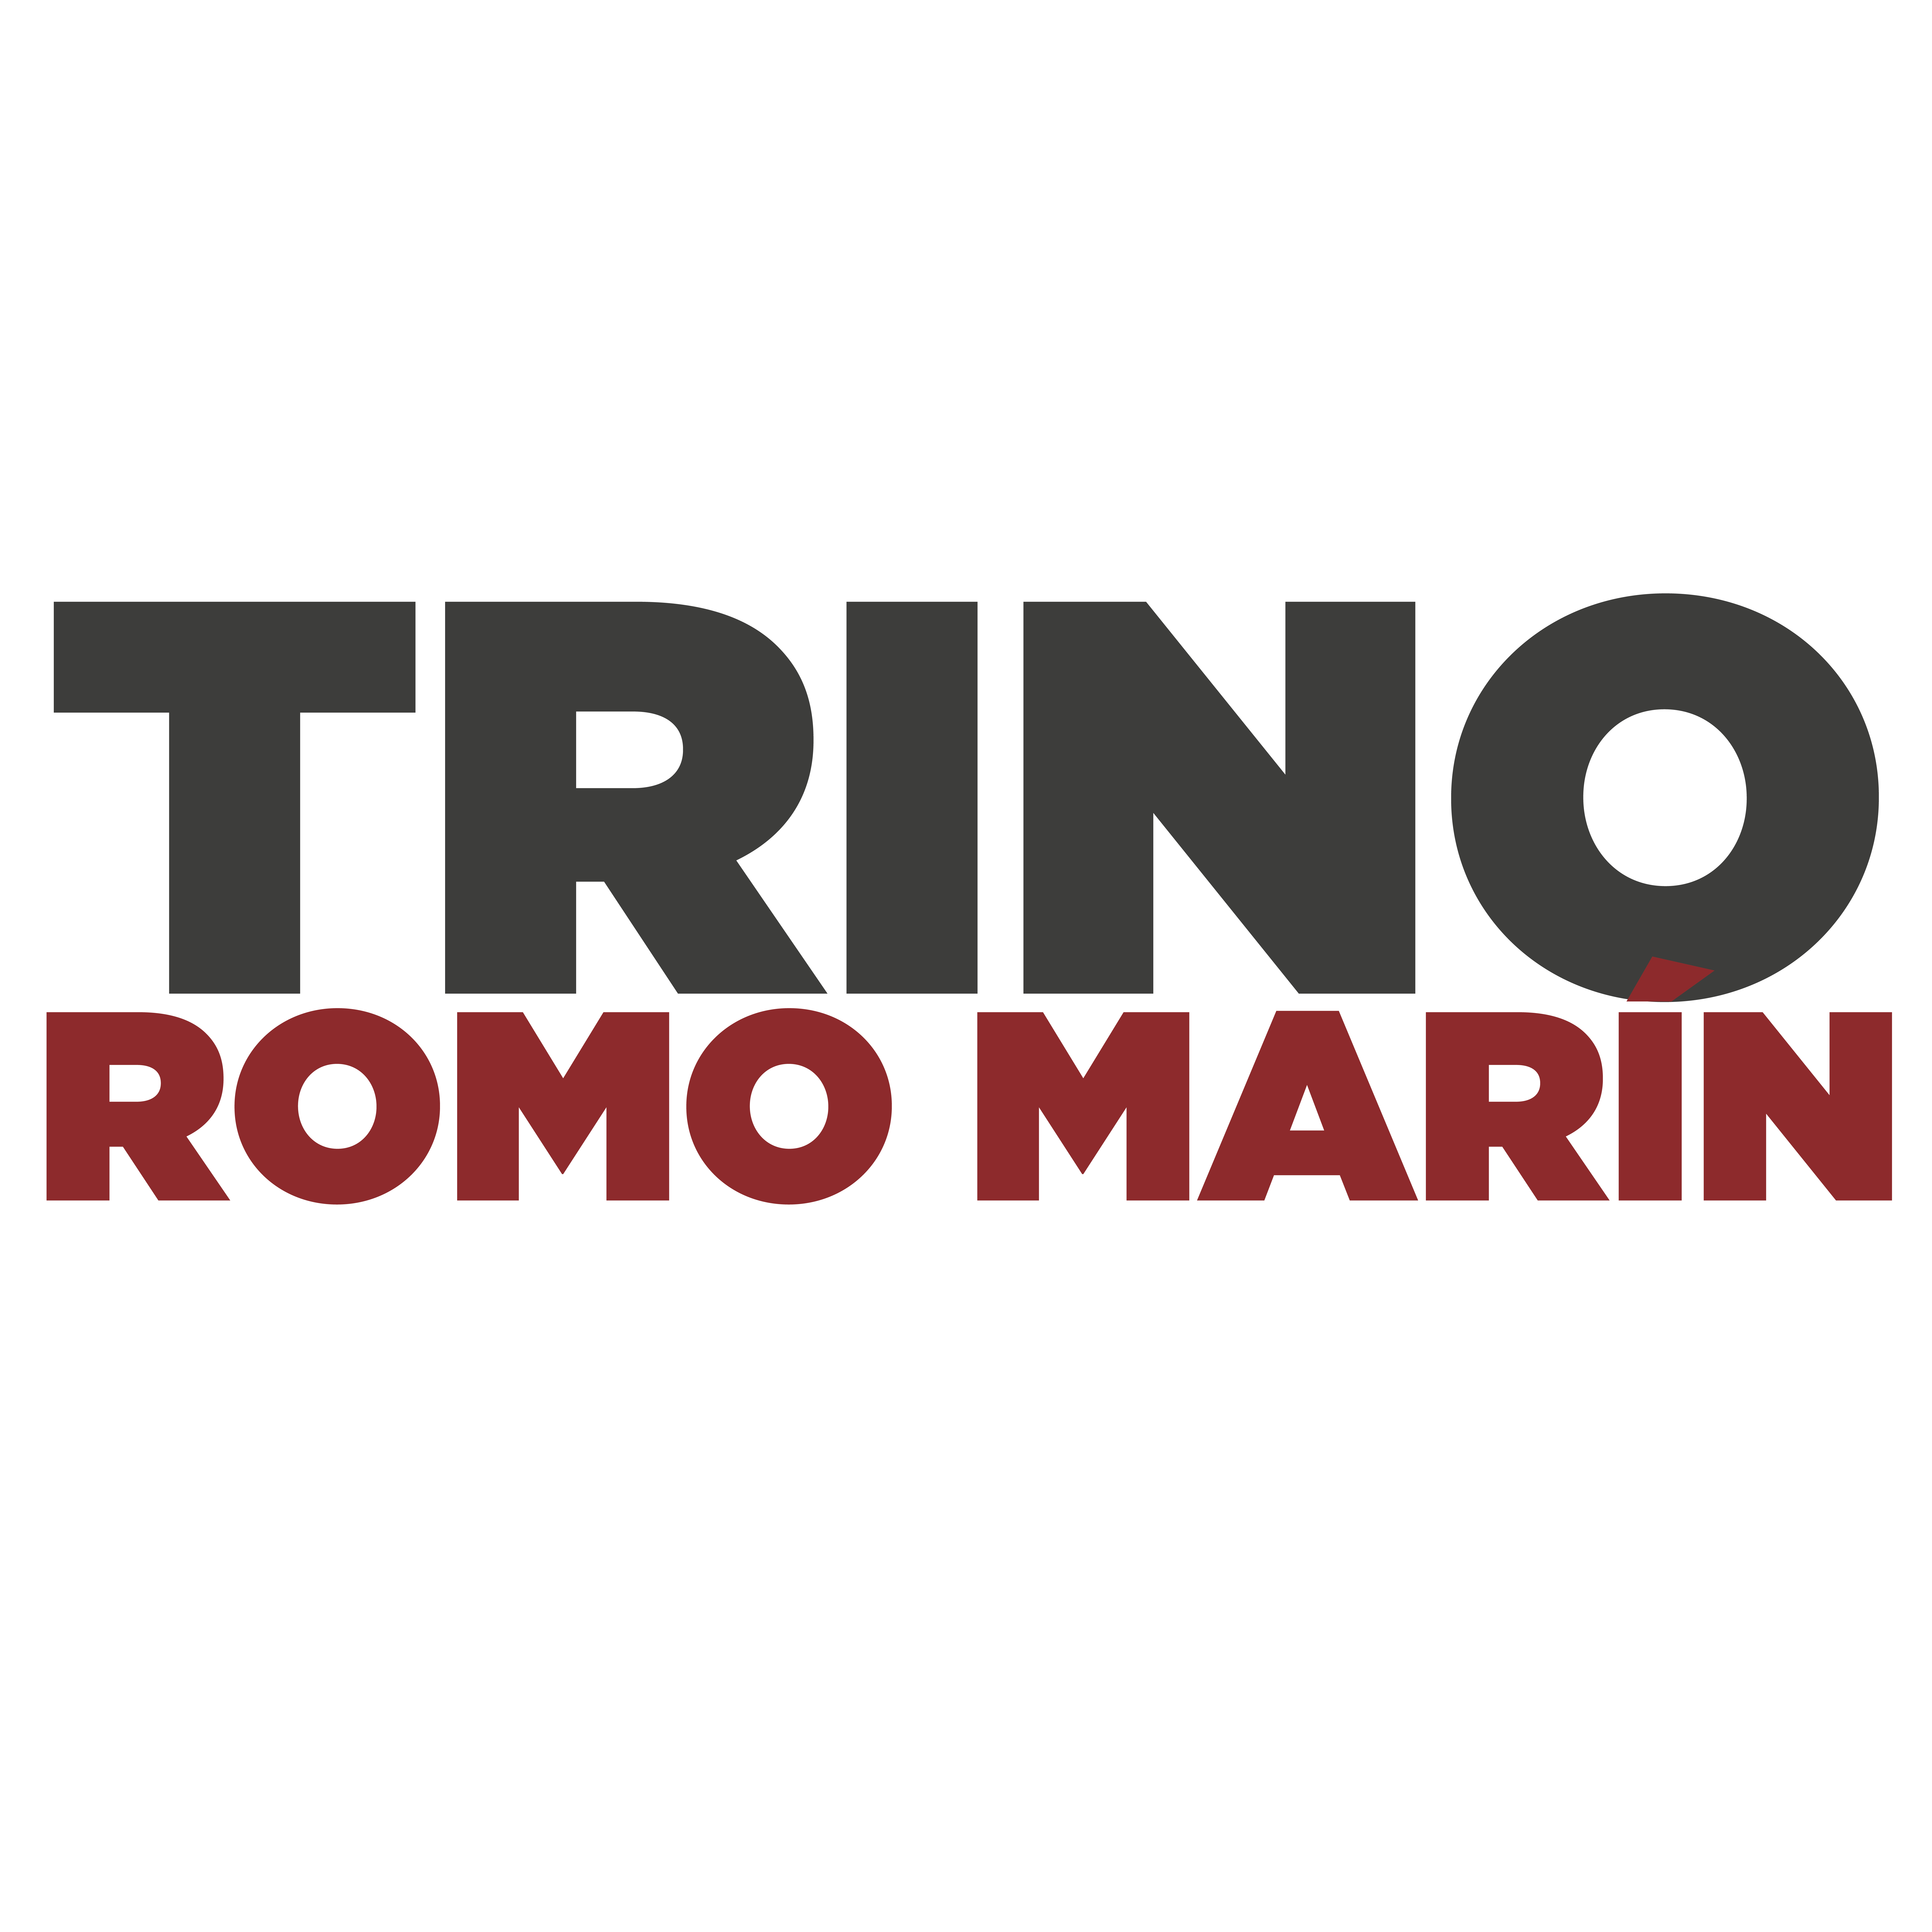 TRINO ROMO MARÍN